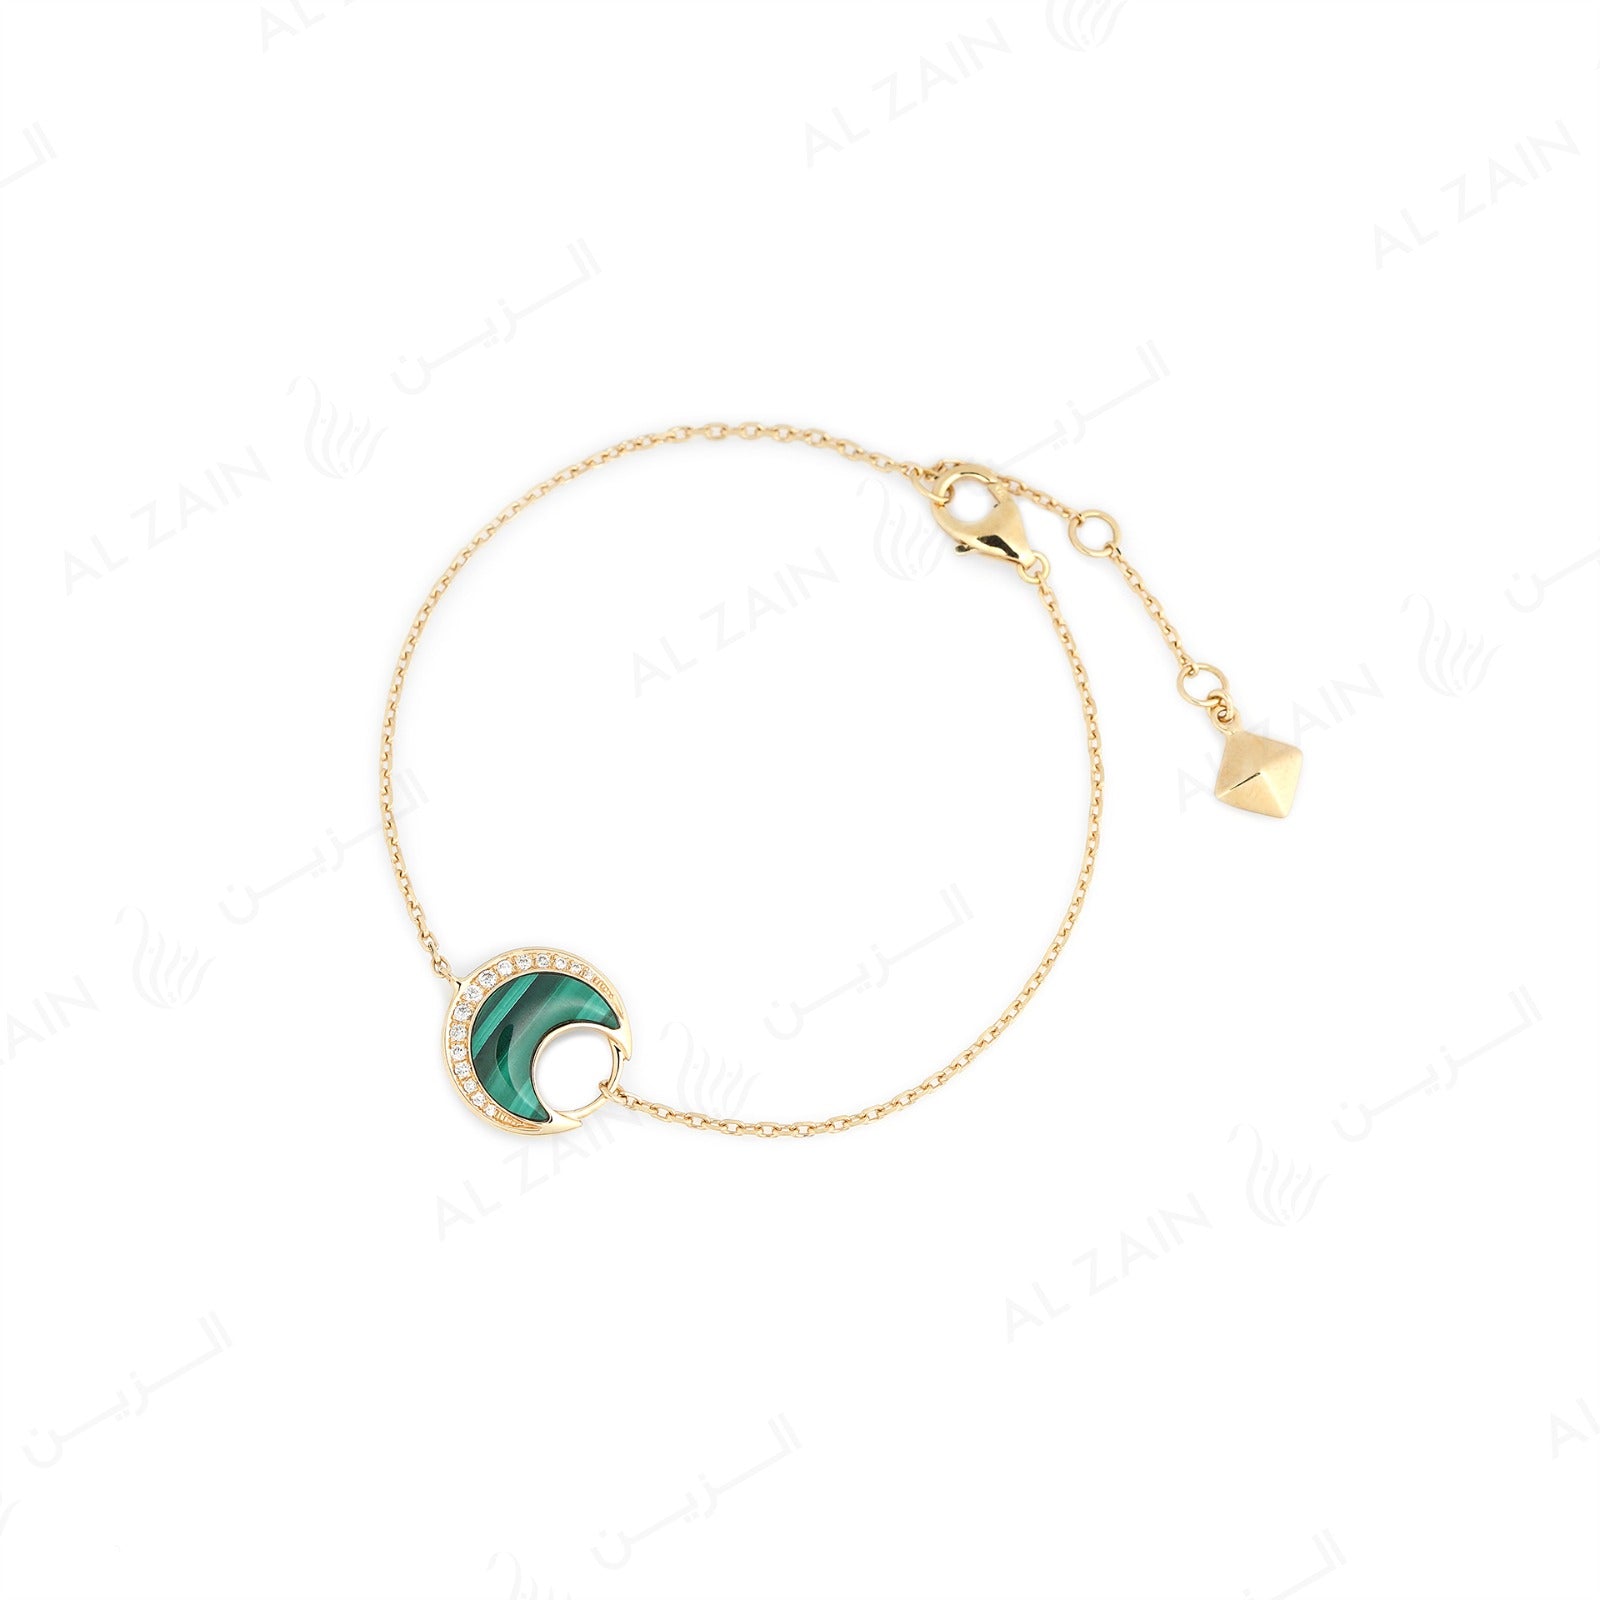 Al Hilal bracelet in yellow gold with malachite stone and diamonds